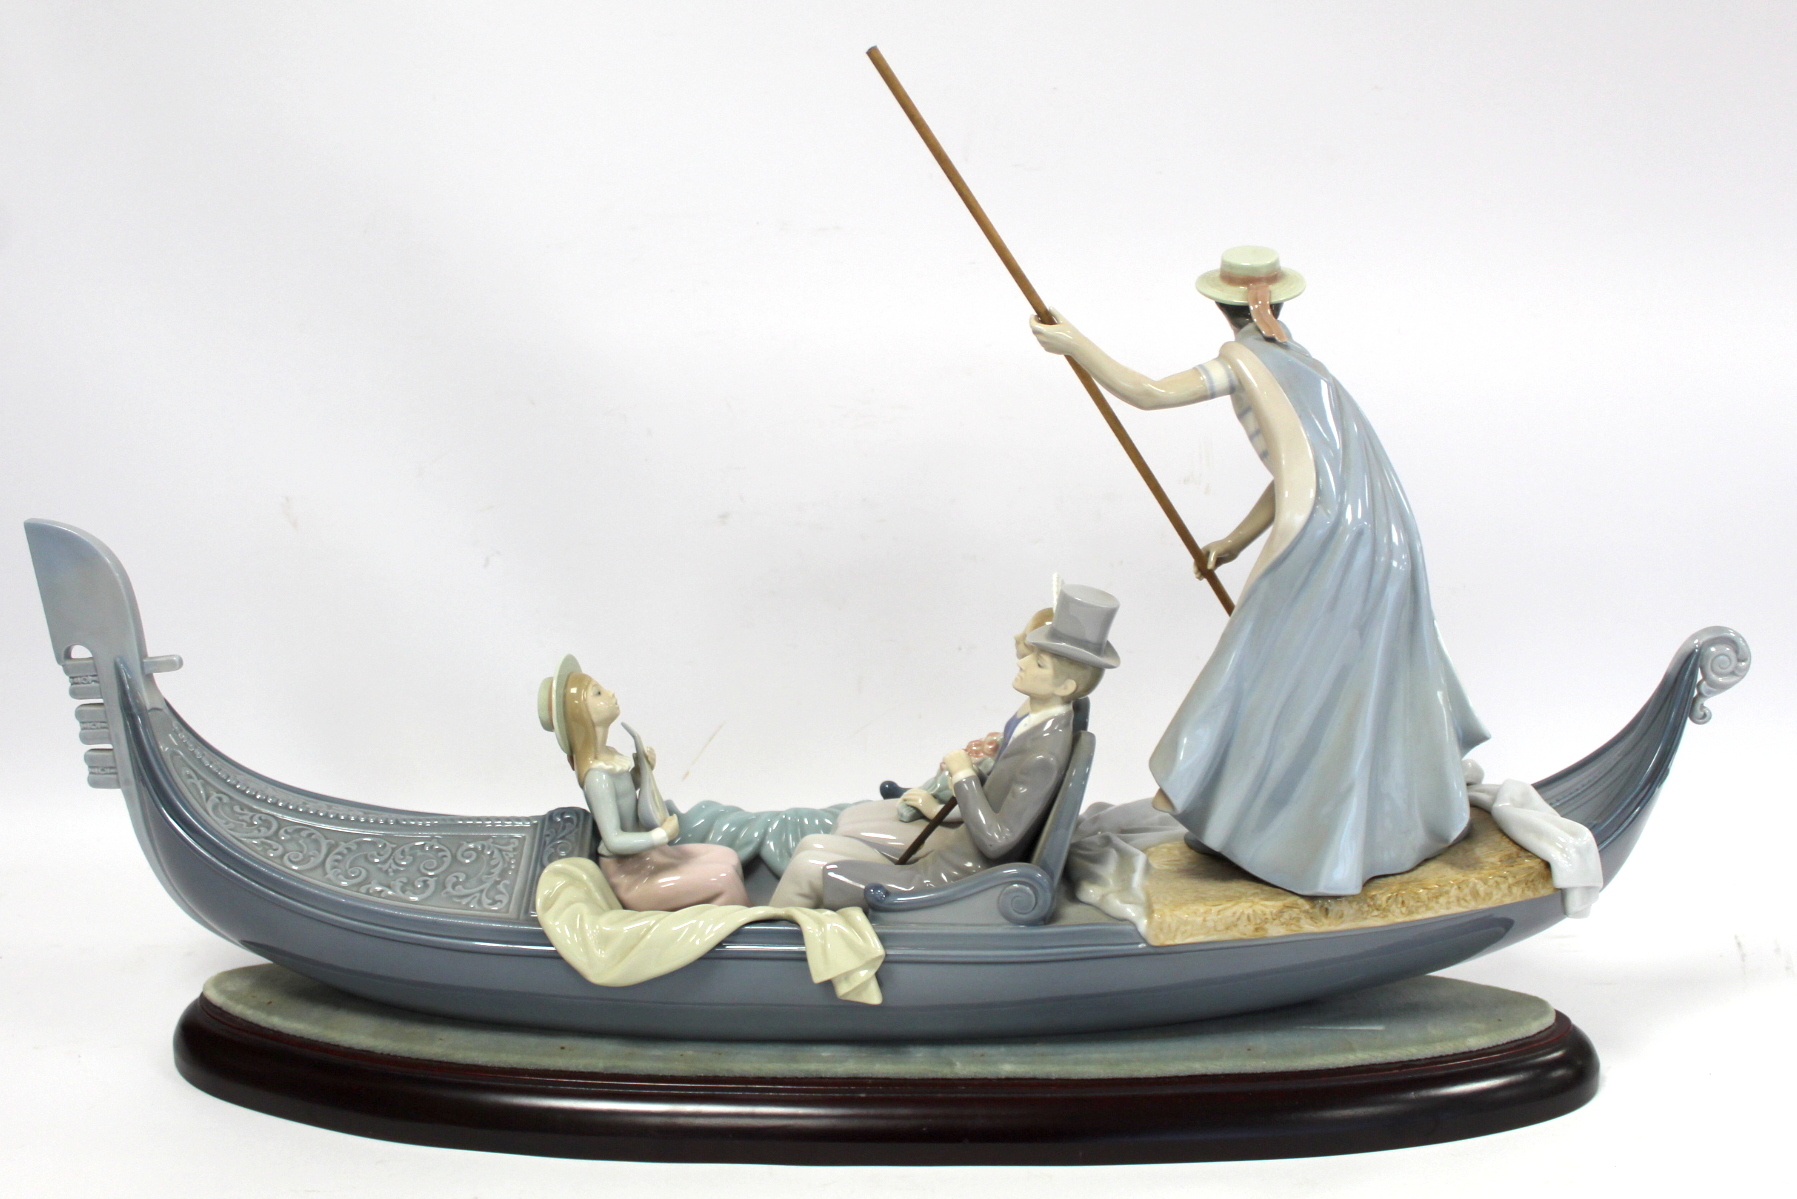 Large Lladro porcelain figure group "En La Gondola" (In the Gondola), model no. 1350, in the form of - Image 4 of 7